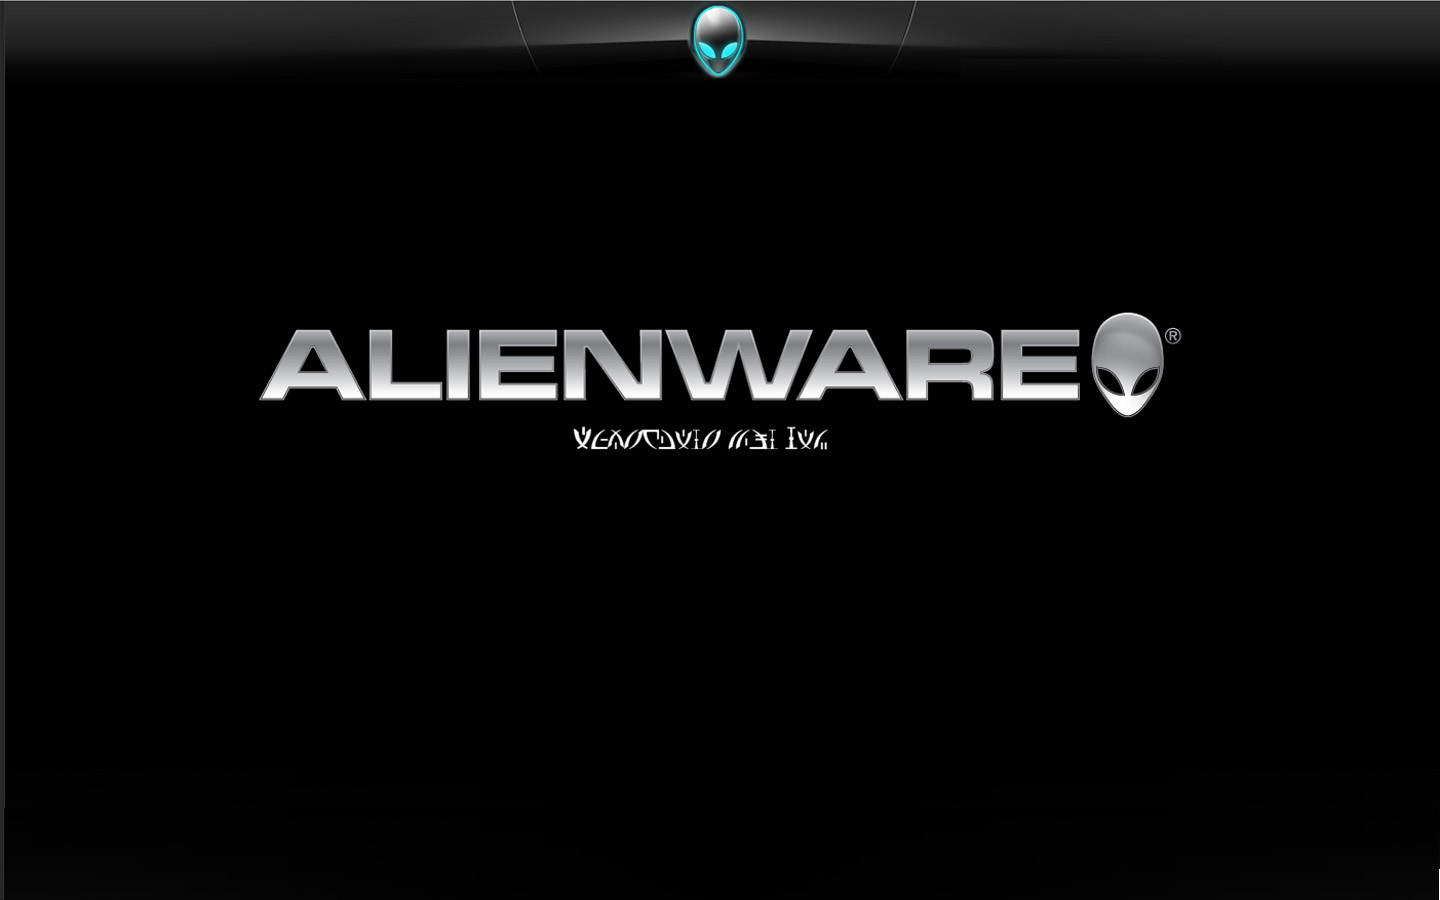 AlienSurface Alienware Wallpaper DIY